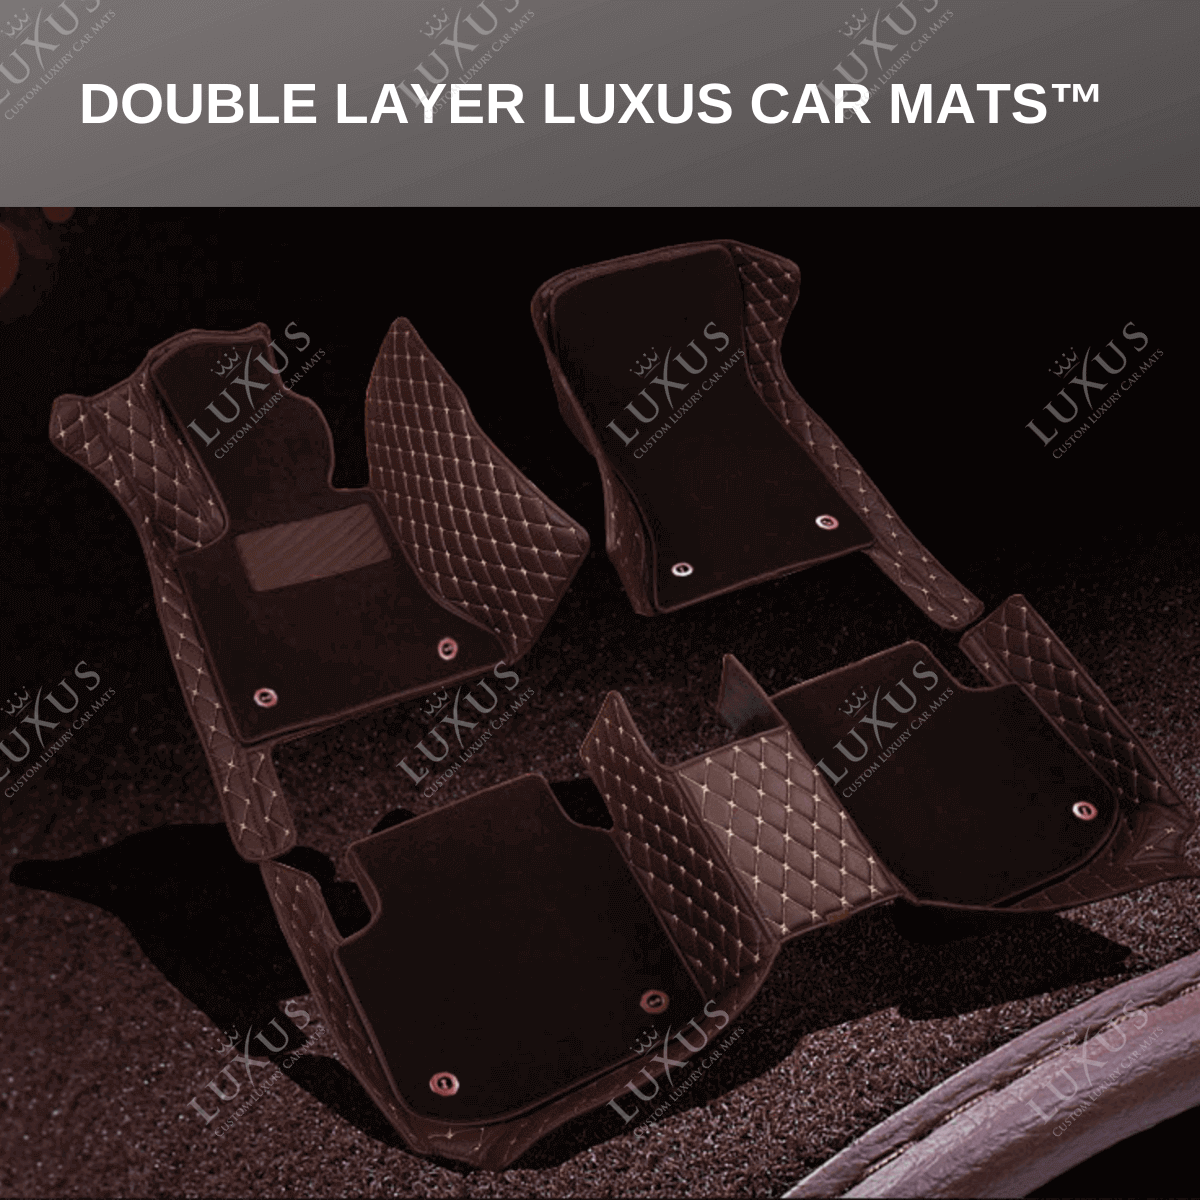 Black & Red Diamond Stitching Base & Grey Top Carpet Double Layer Luxury Car Mats Set